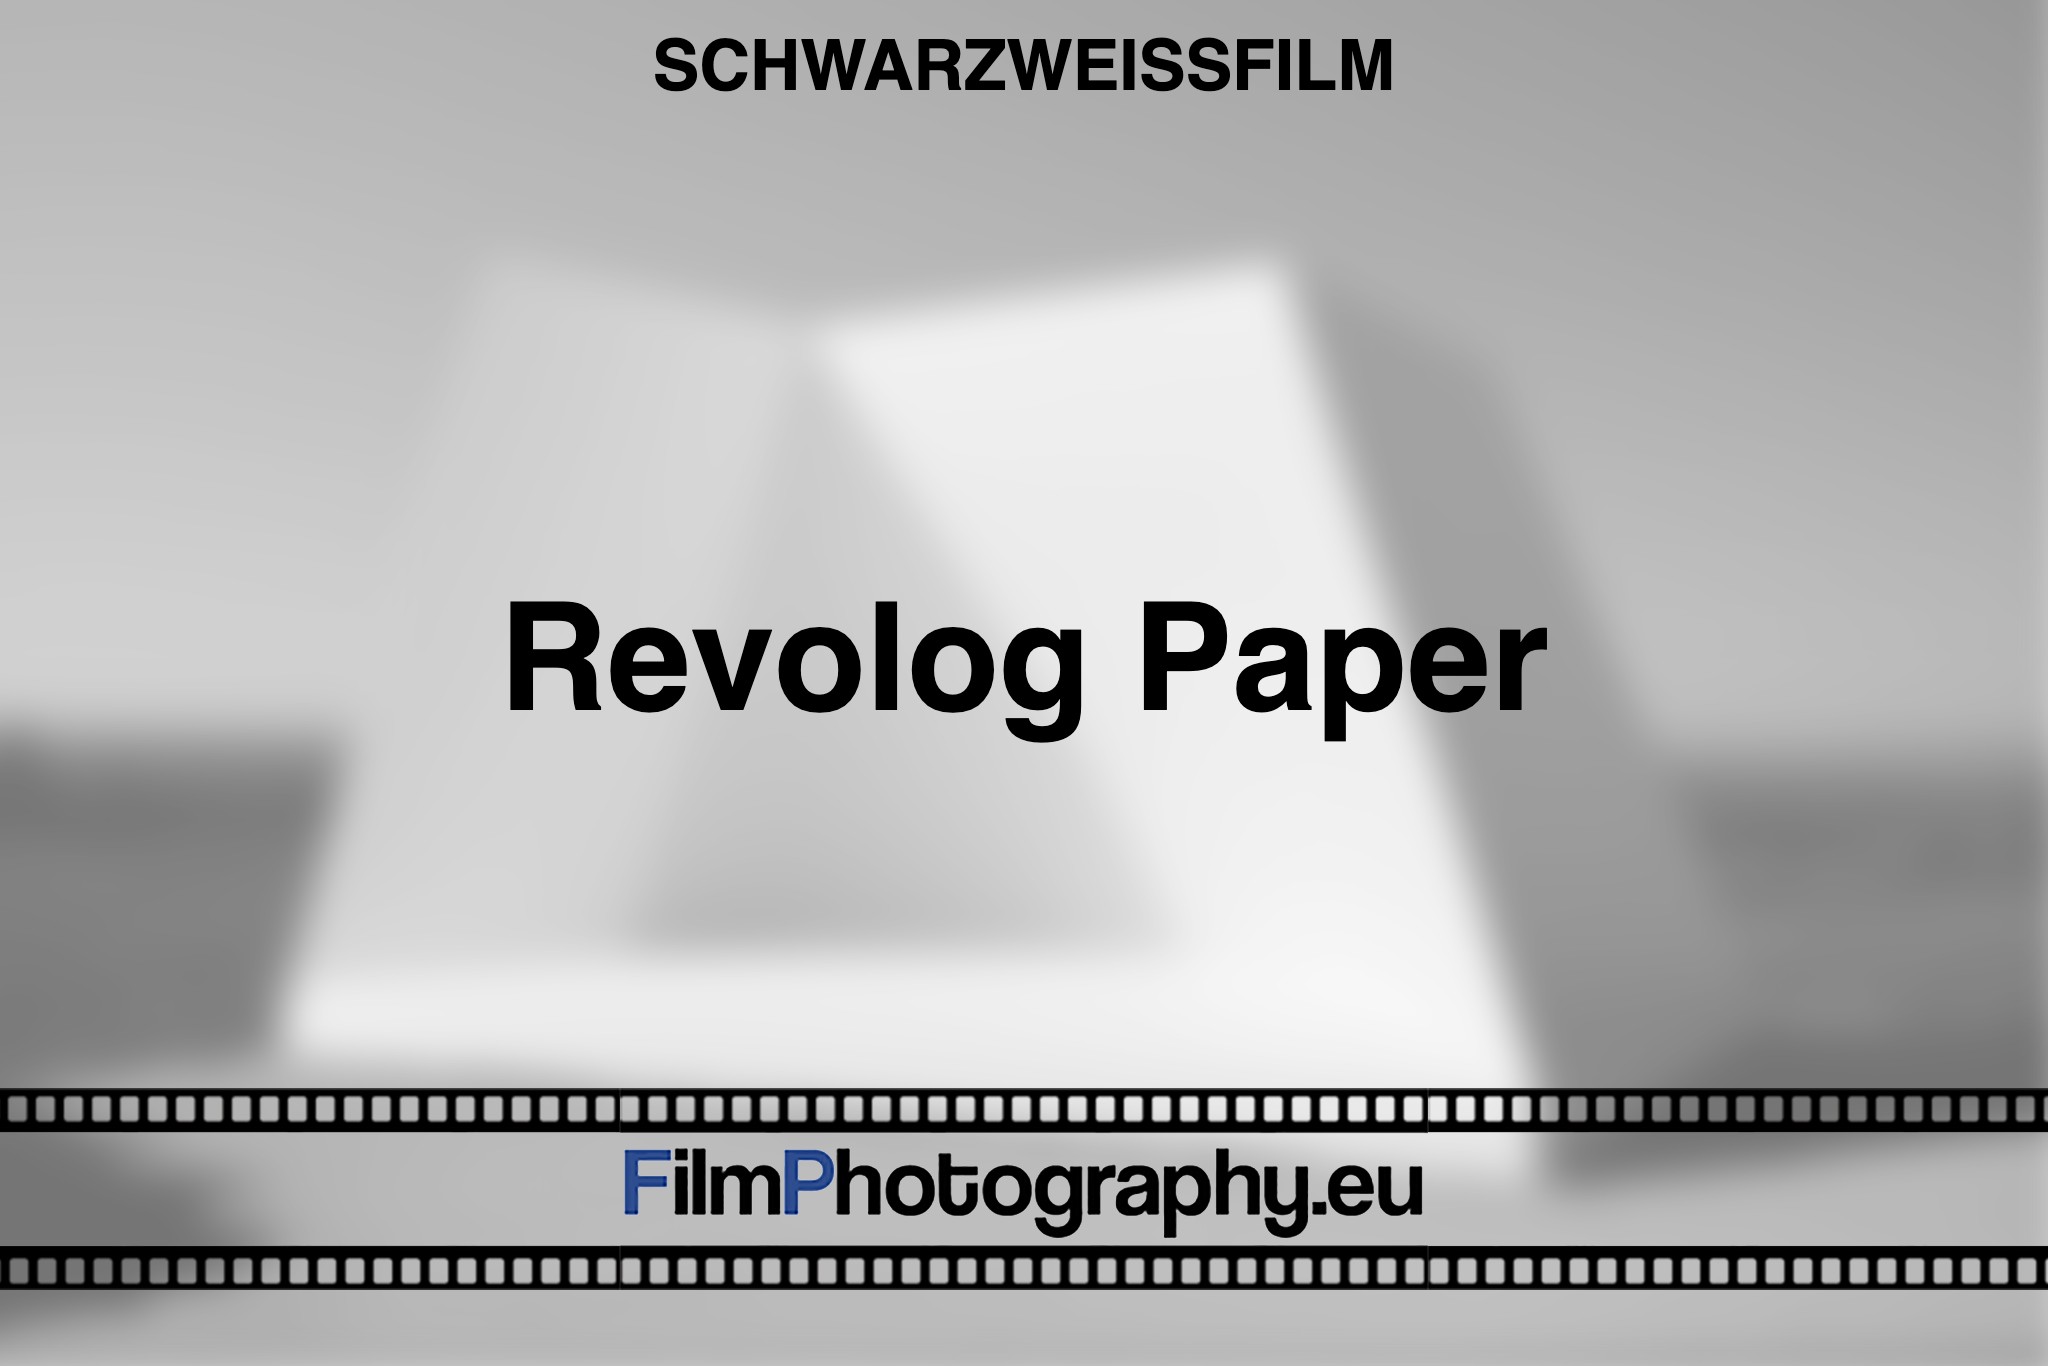 Revolog-Paper-Schwarzweissfilm-bnv